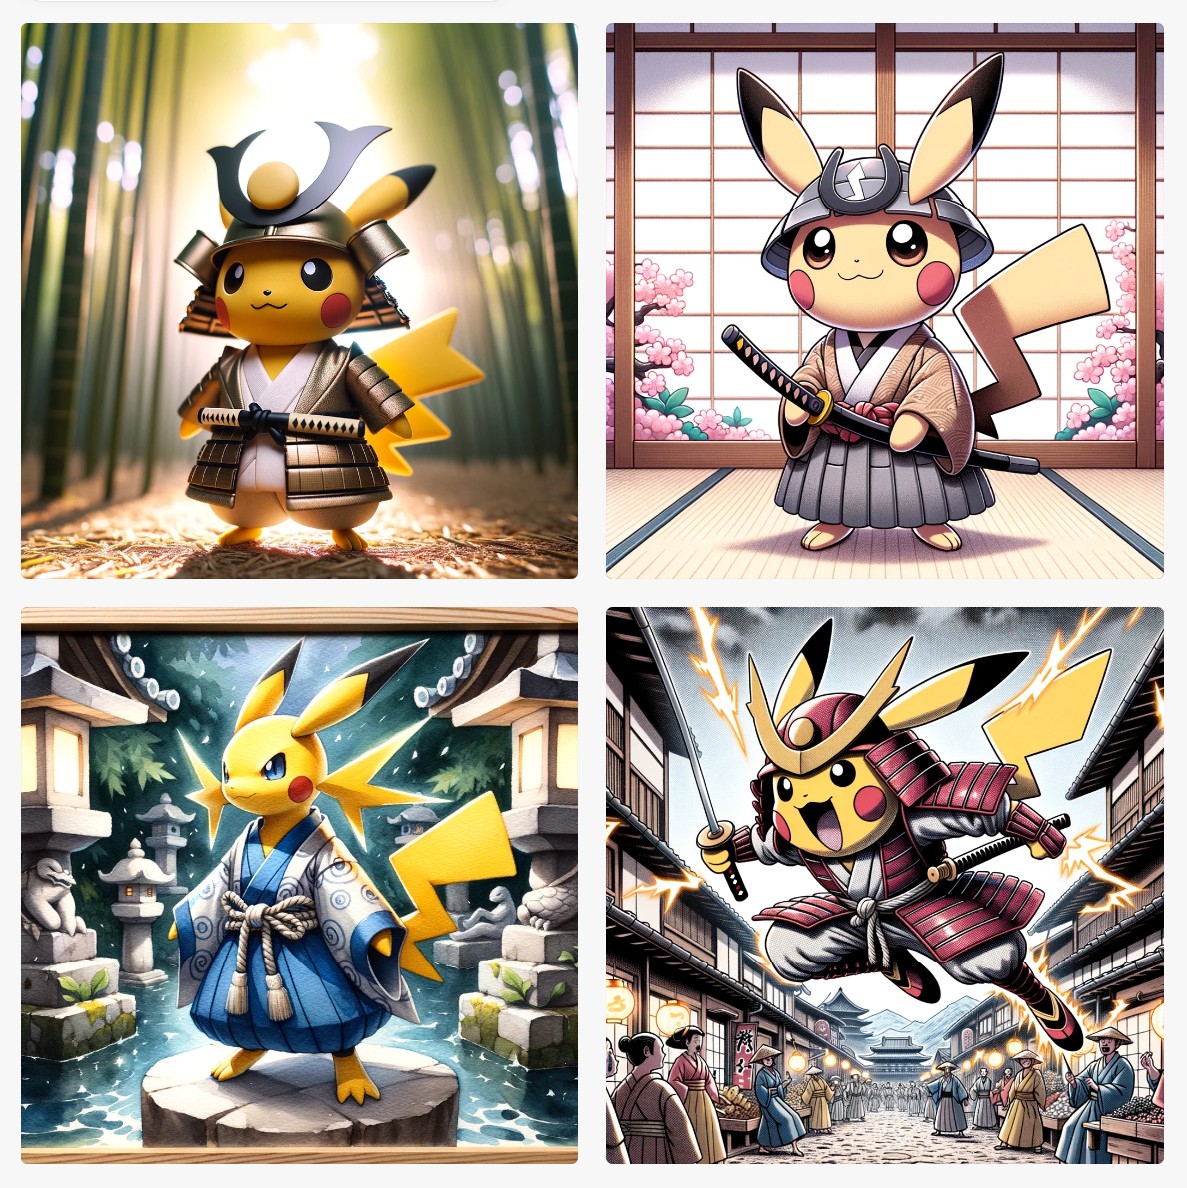 Pikachu Samurai Costume 2 by dalle 3